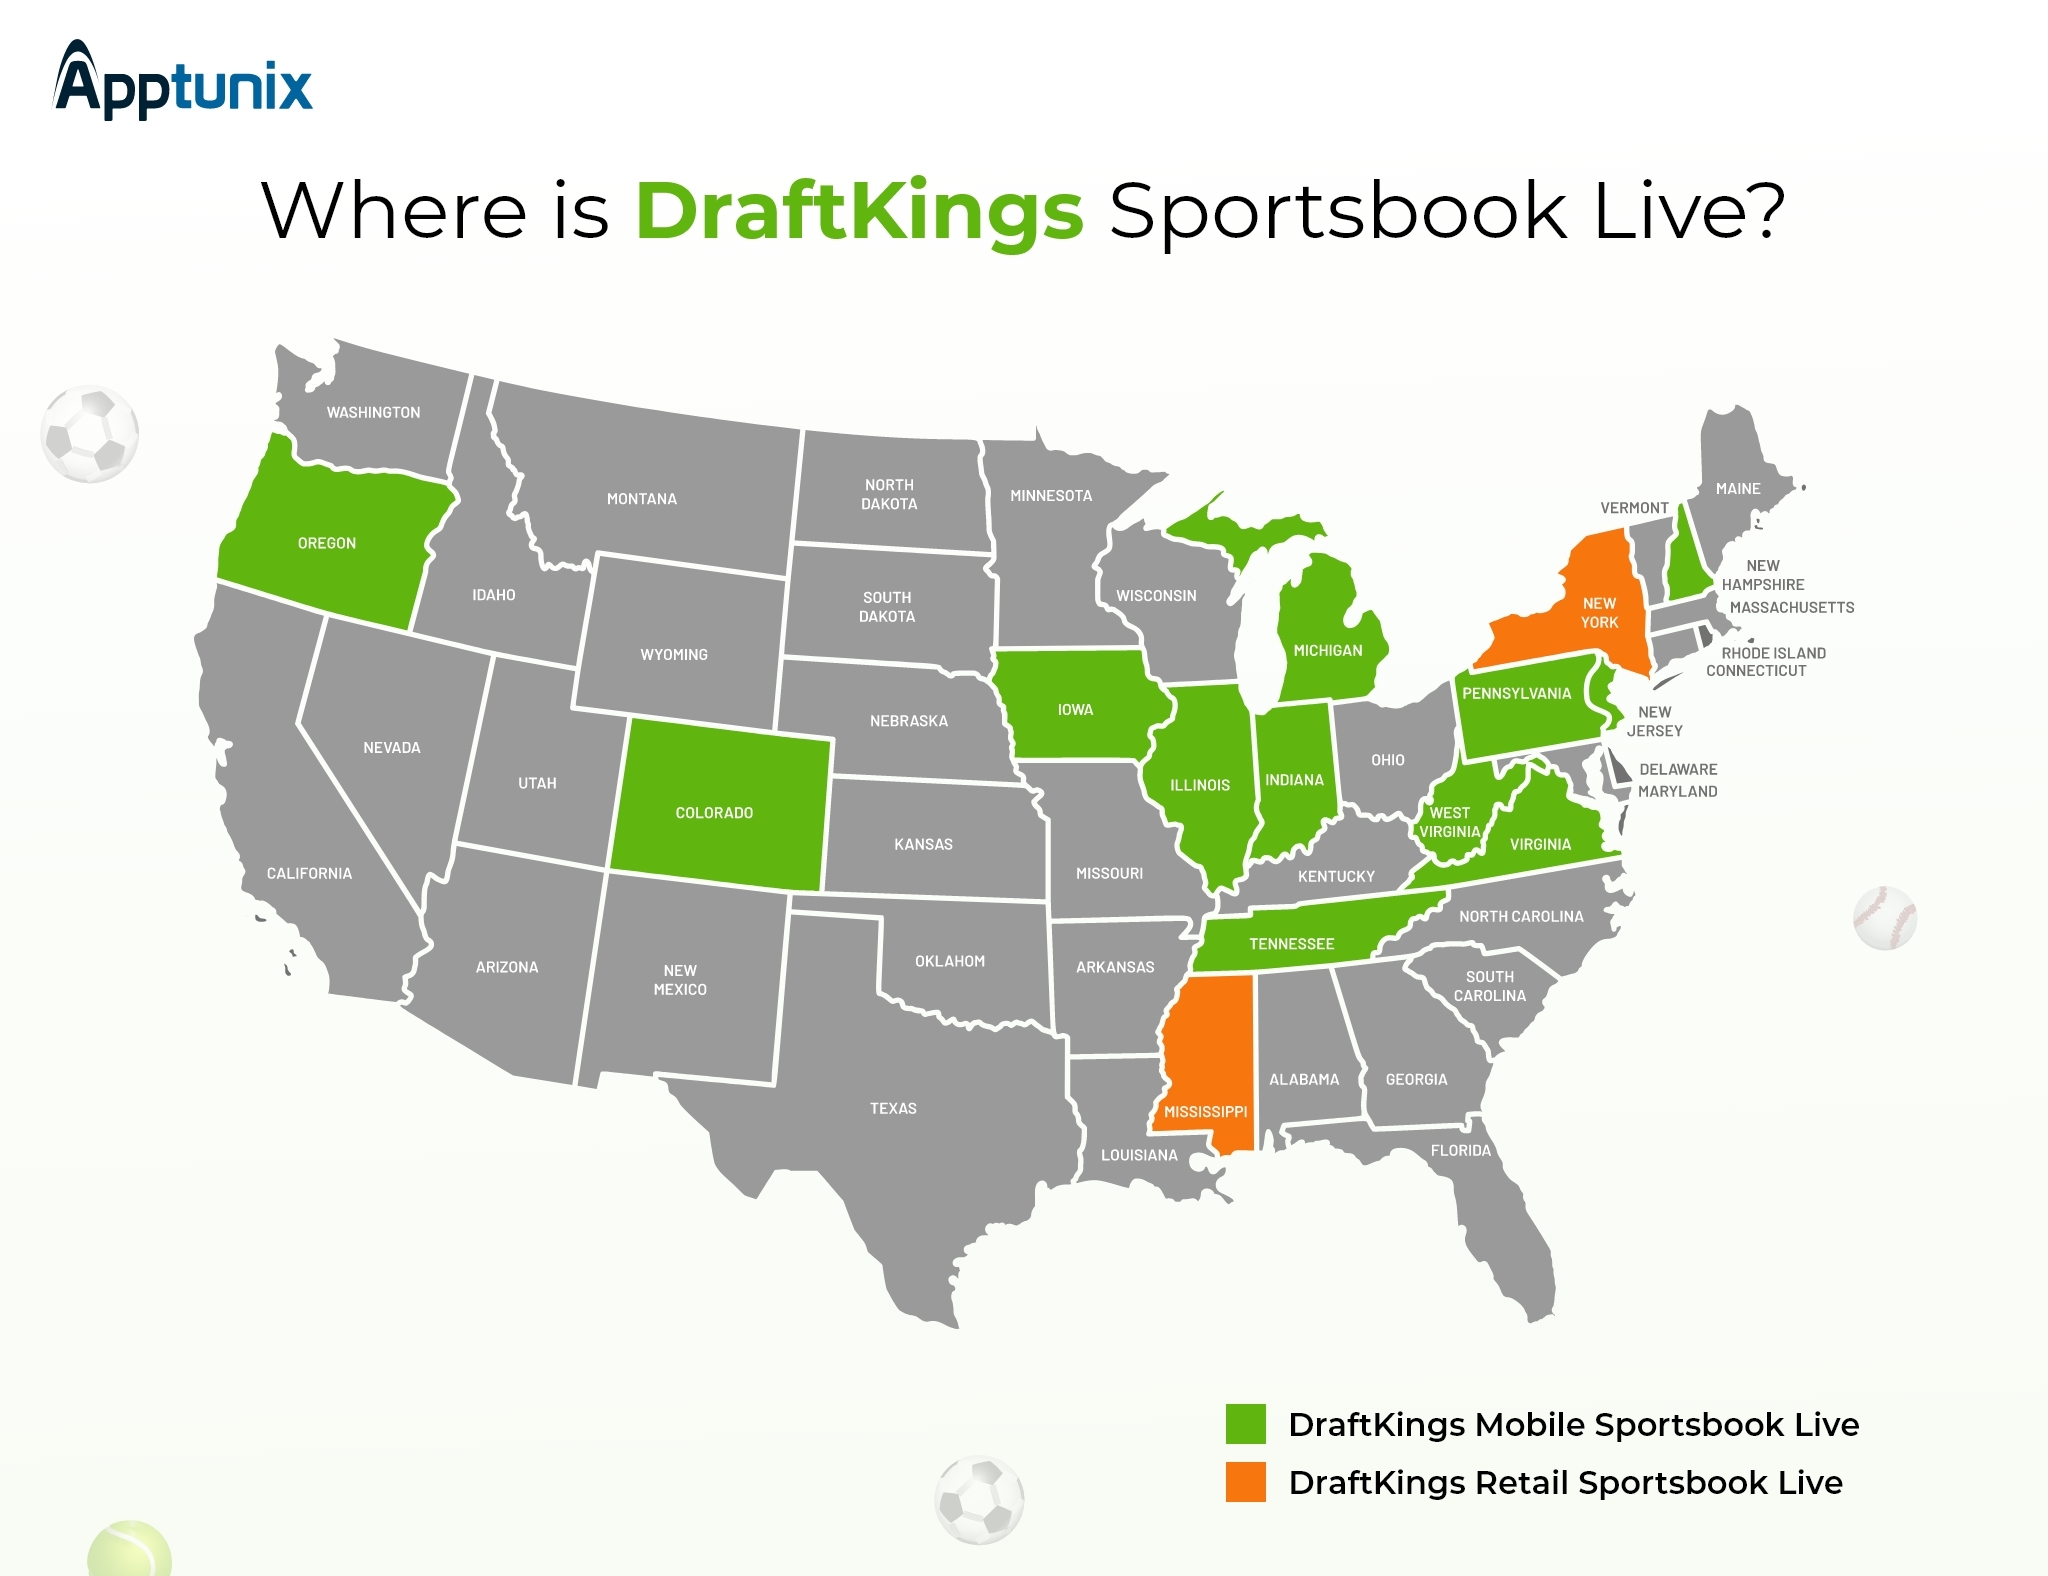 Draftkings Sportsbook business model